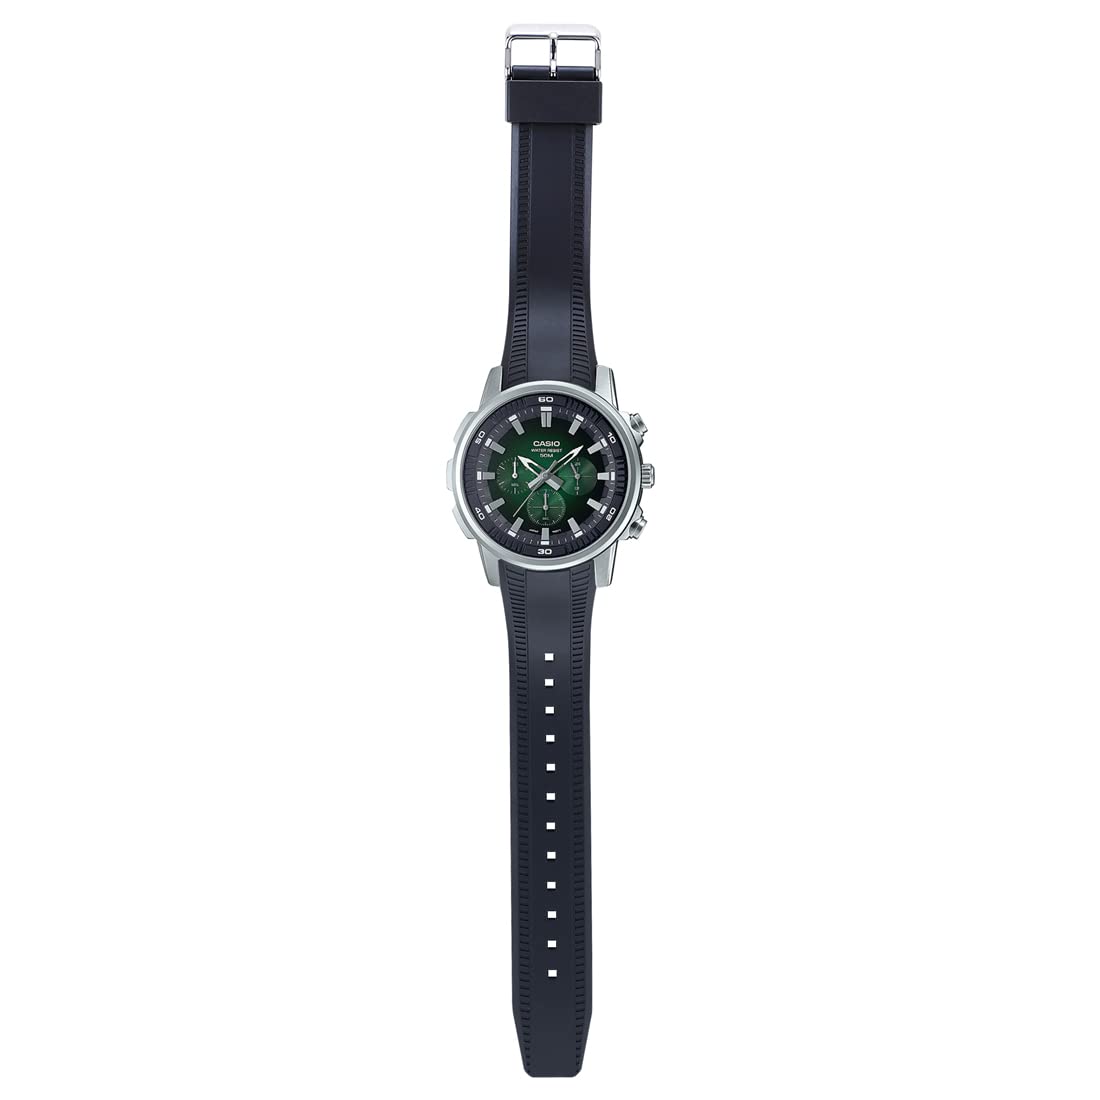 Casio MTP-E505-3AVDF Enticer Men's Analog Watch